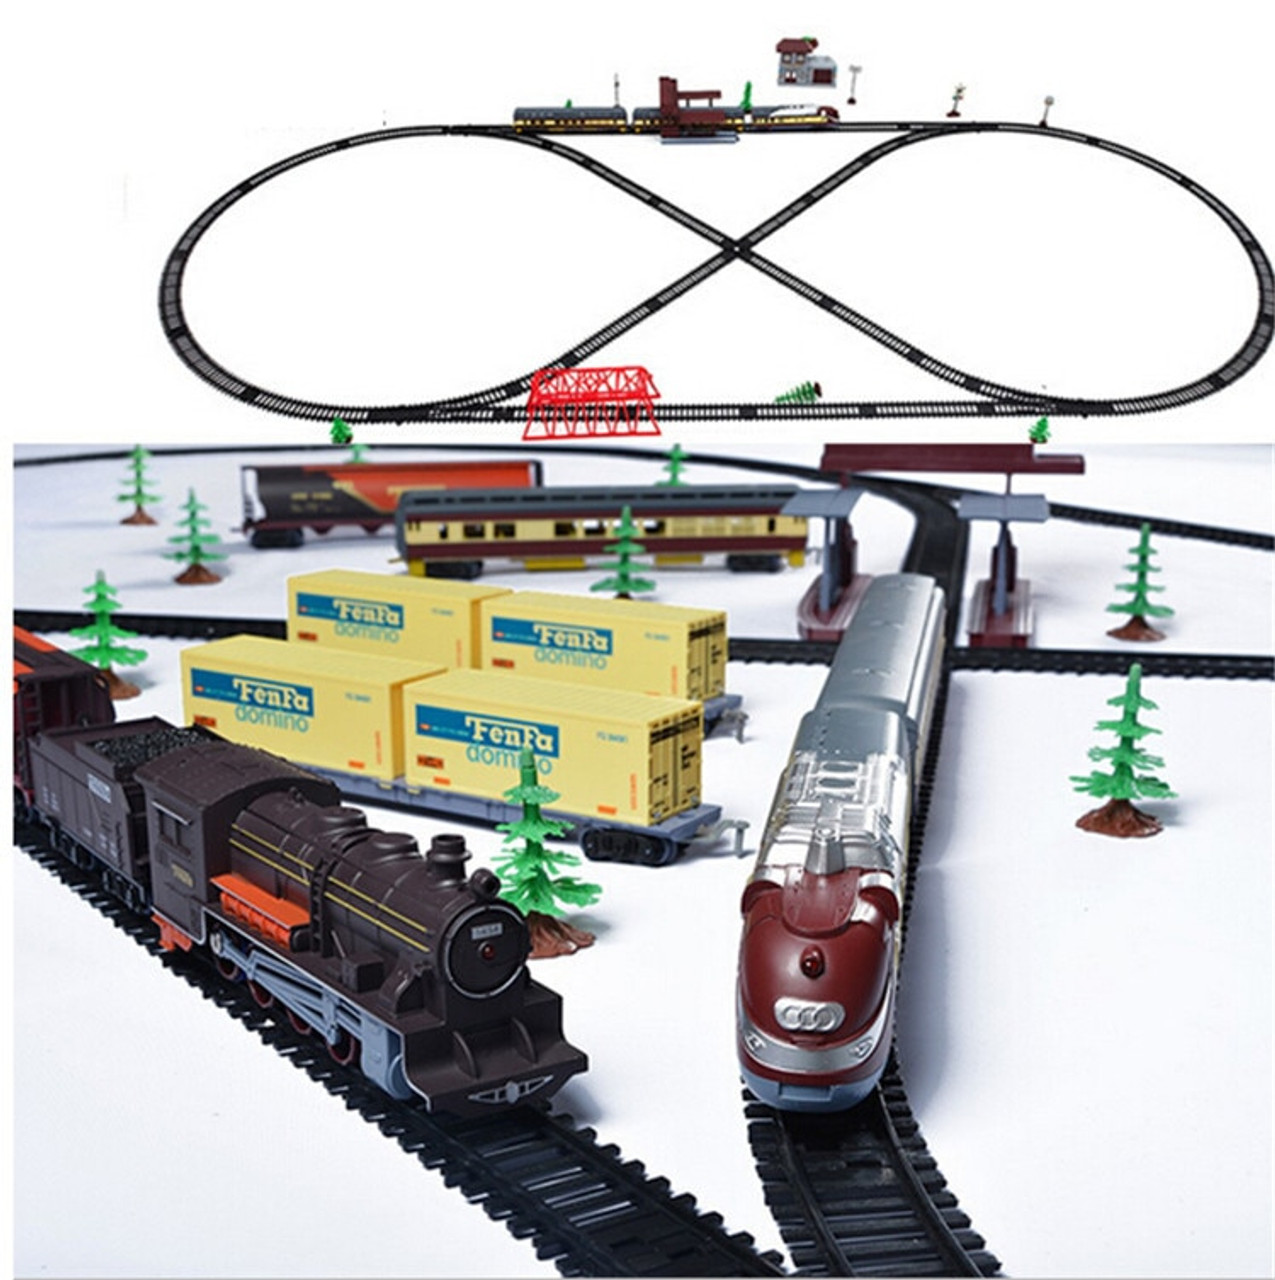 toy train set electric